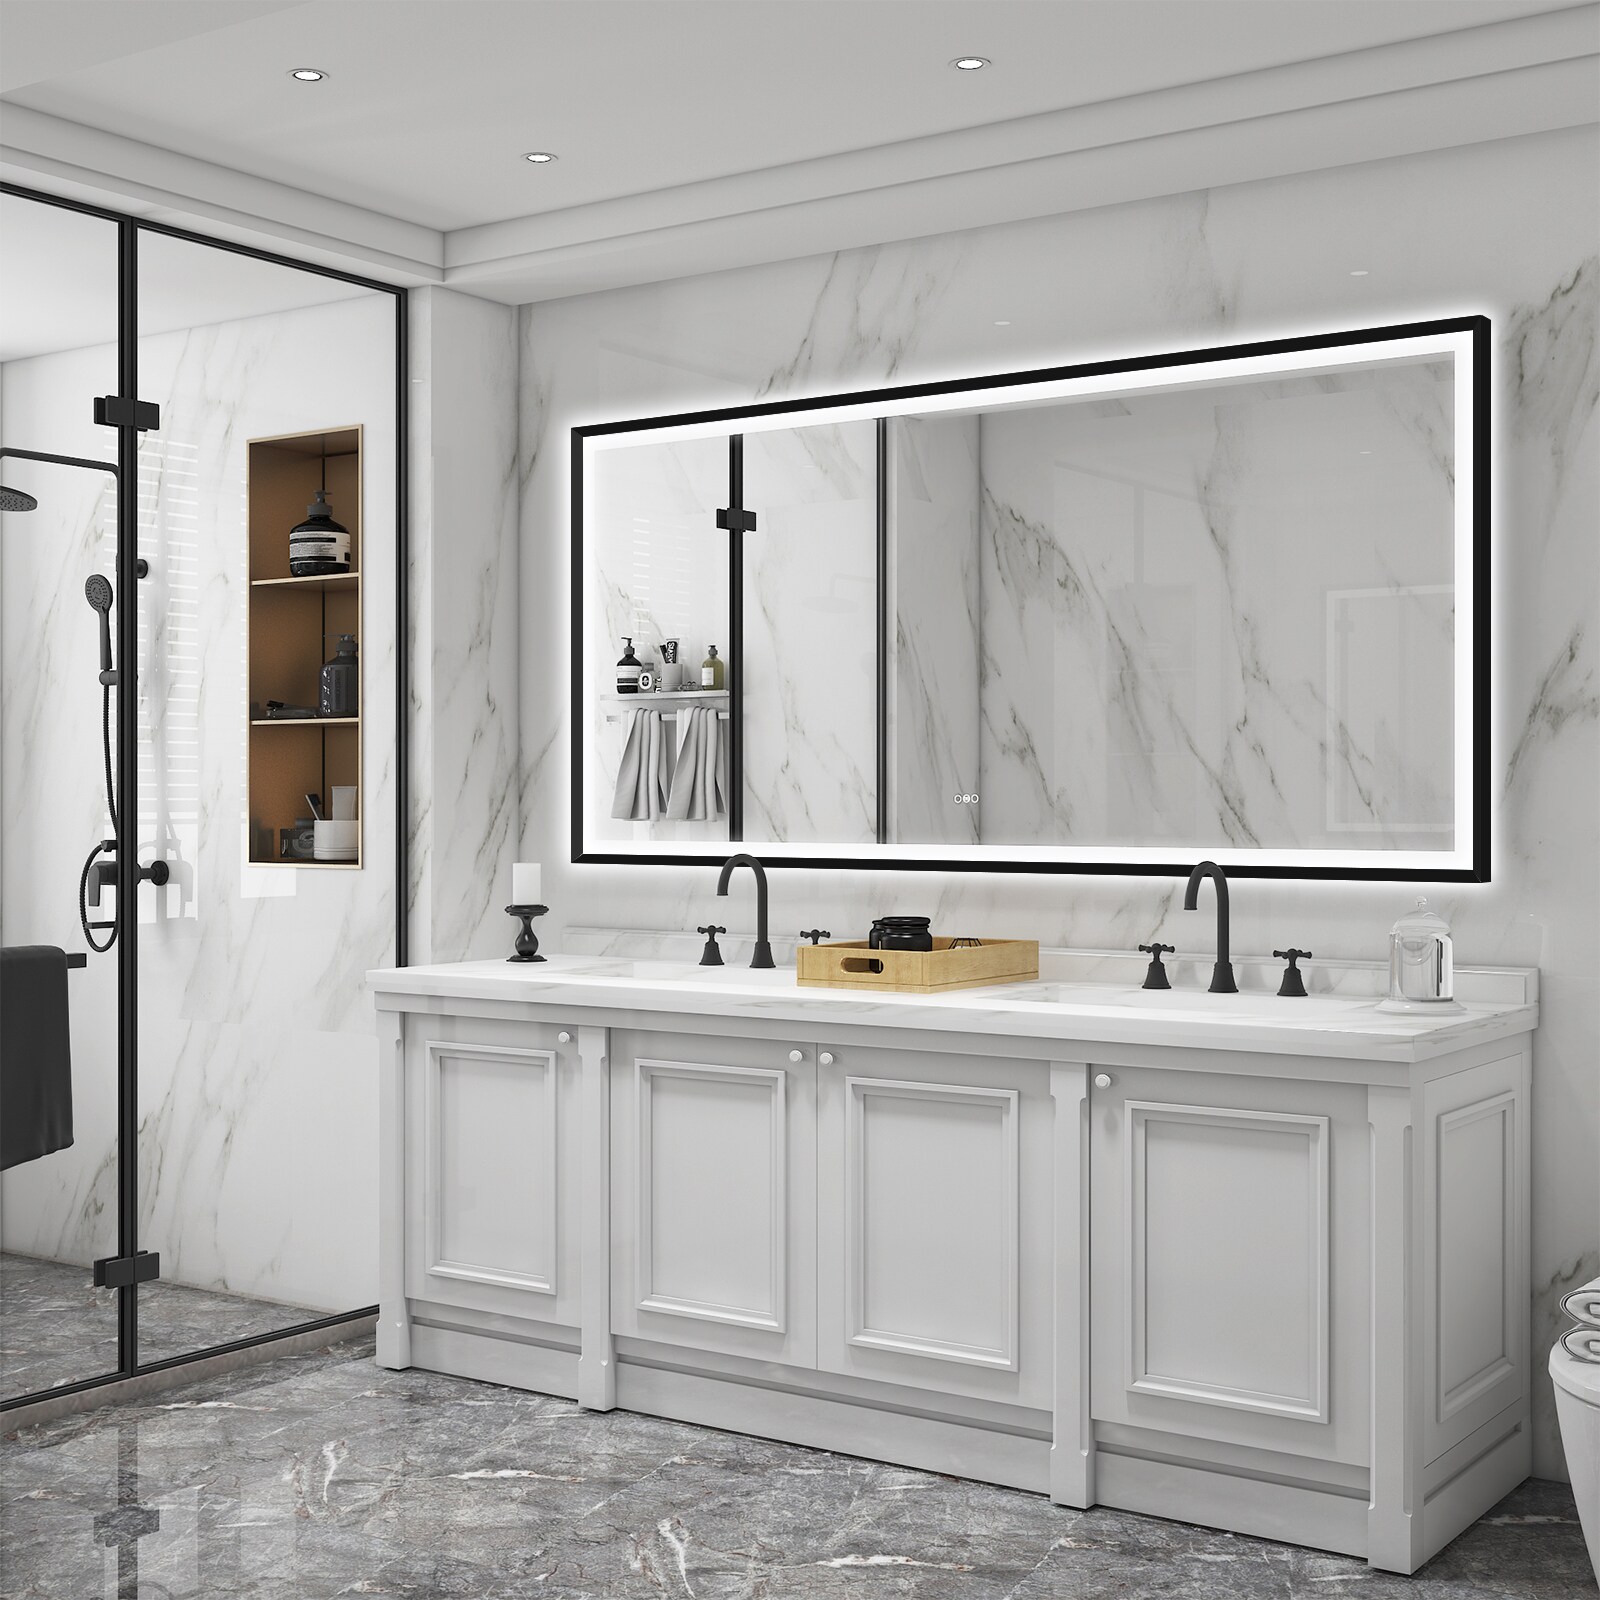 WELLFOR BG LED Bathroom Mirror 32-in x 32-in LED Lighted Gold Round Fog Free Framed Bathroom Vanity Mirror | DH-MC04-2836SF1